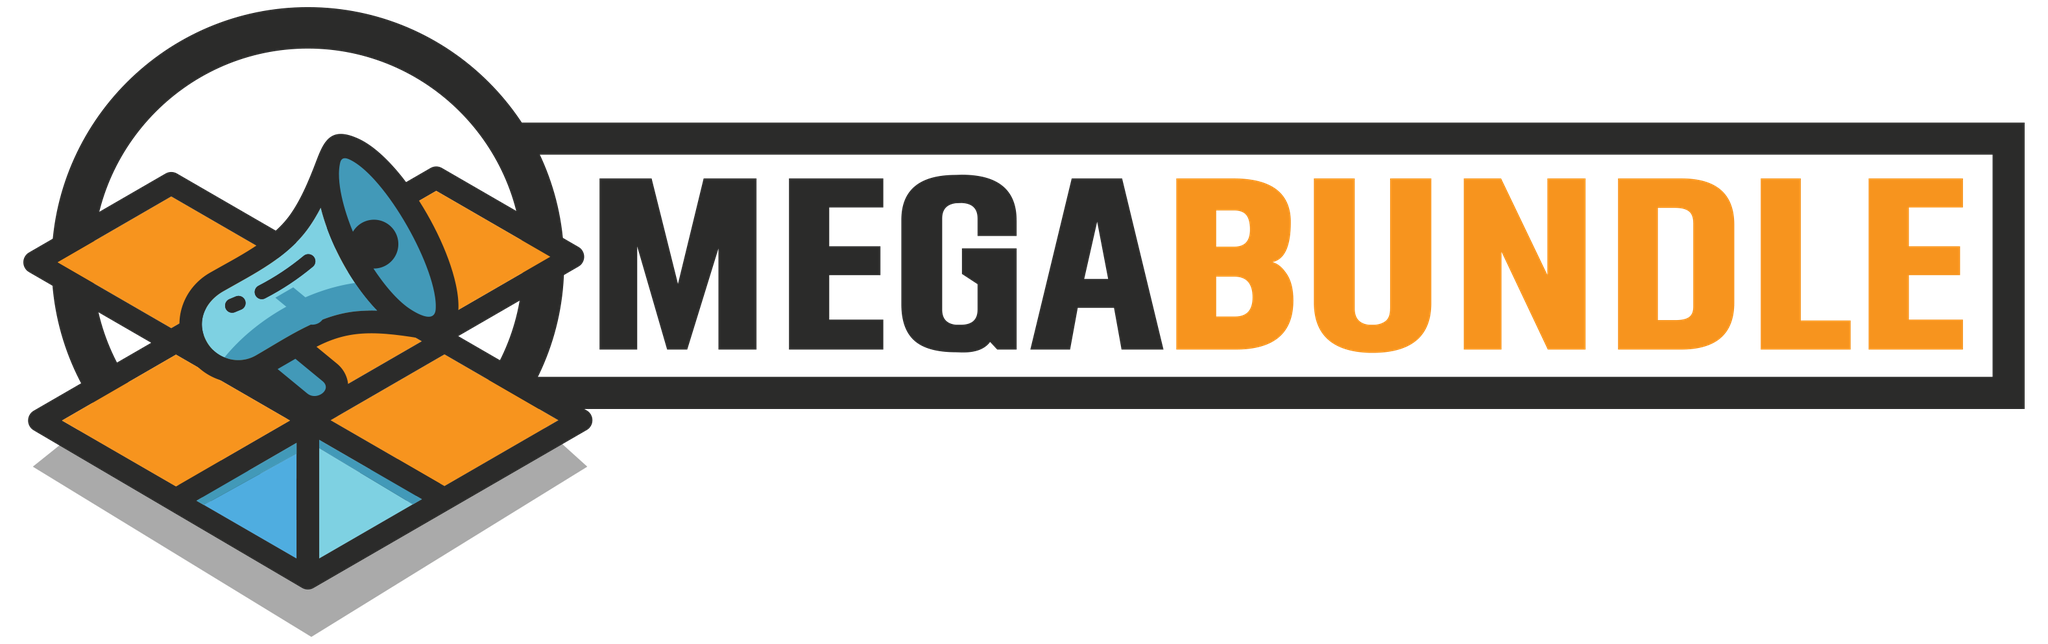 mega bundle logo